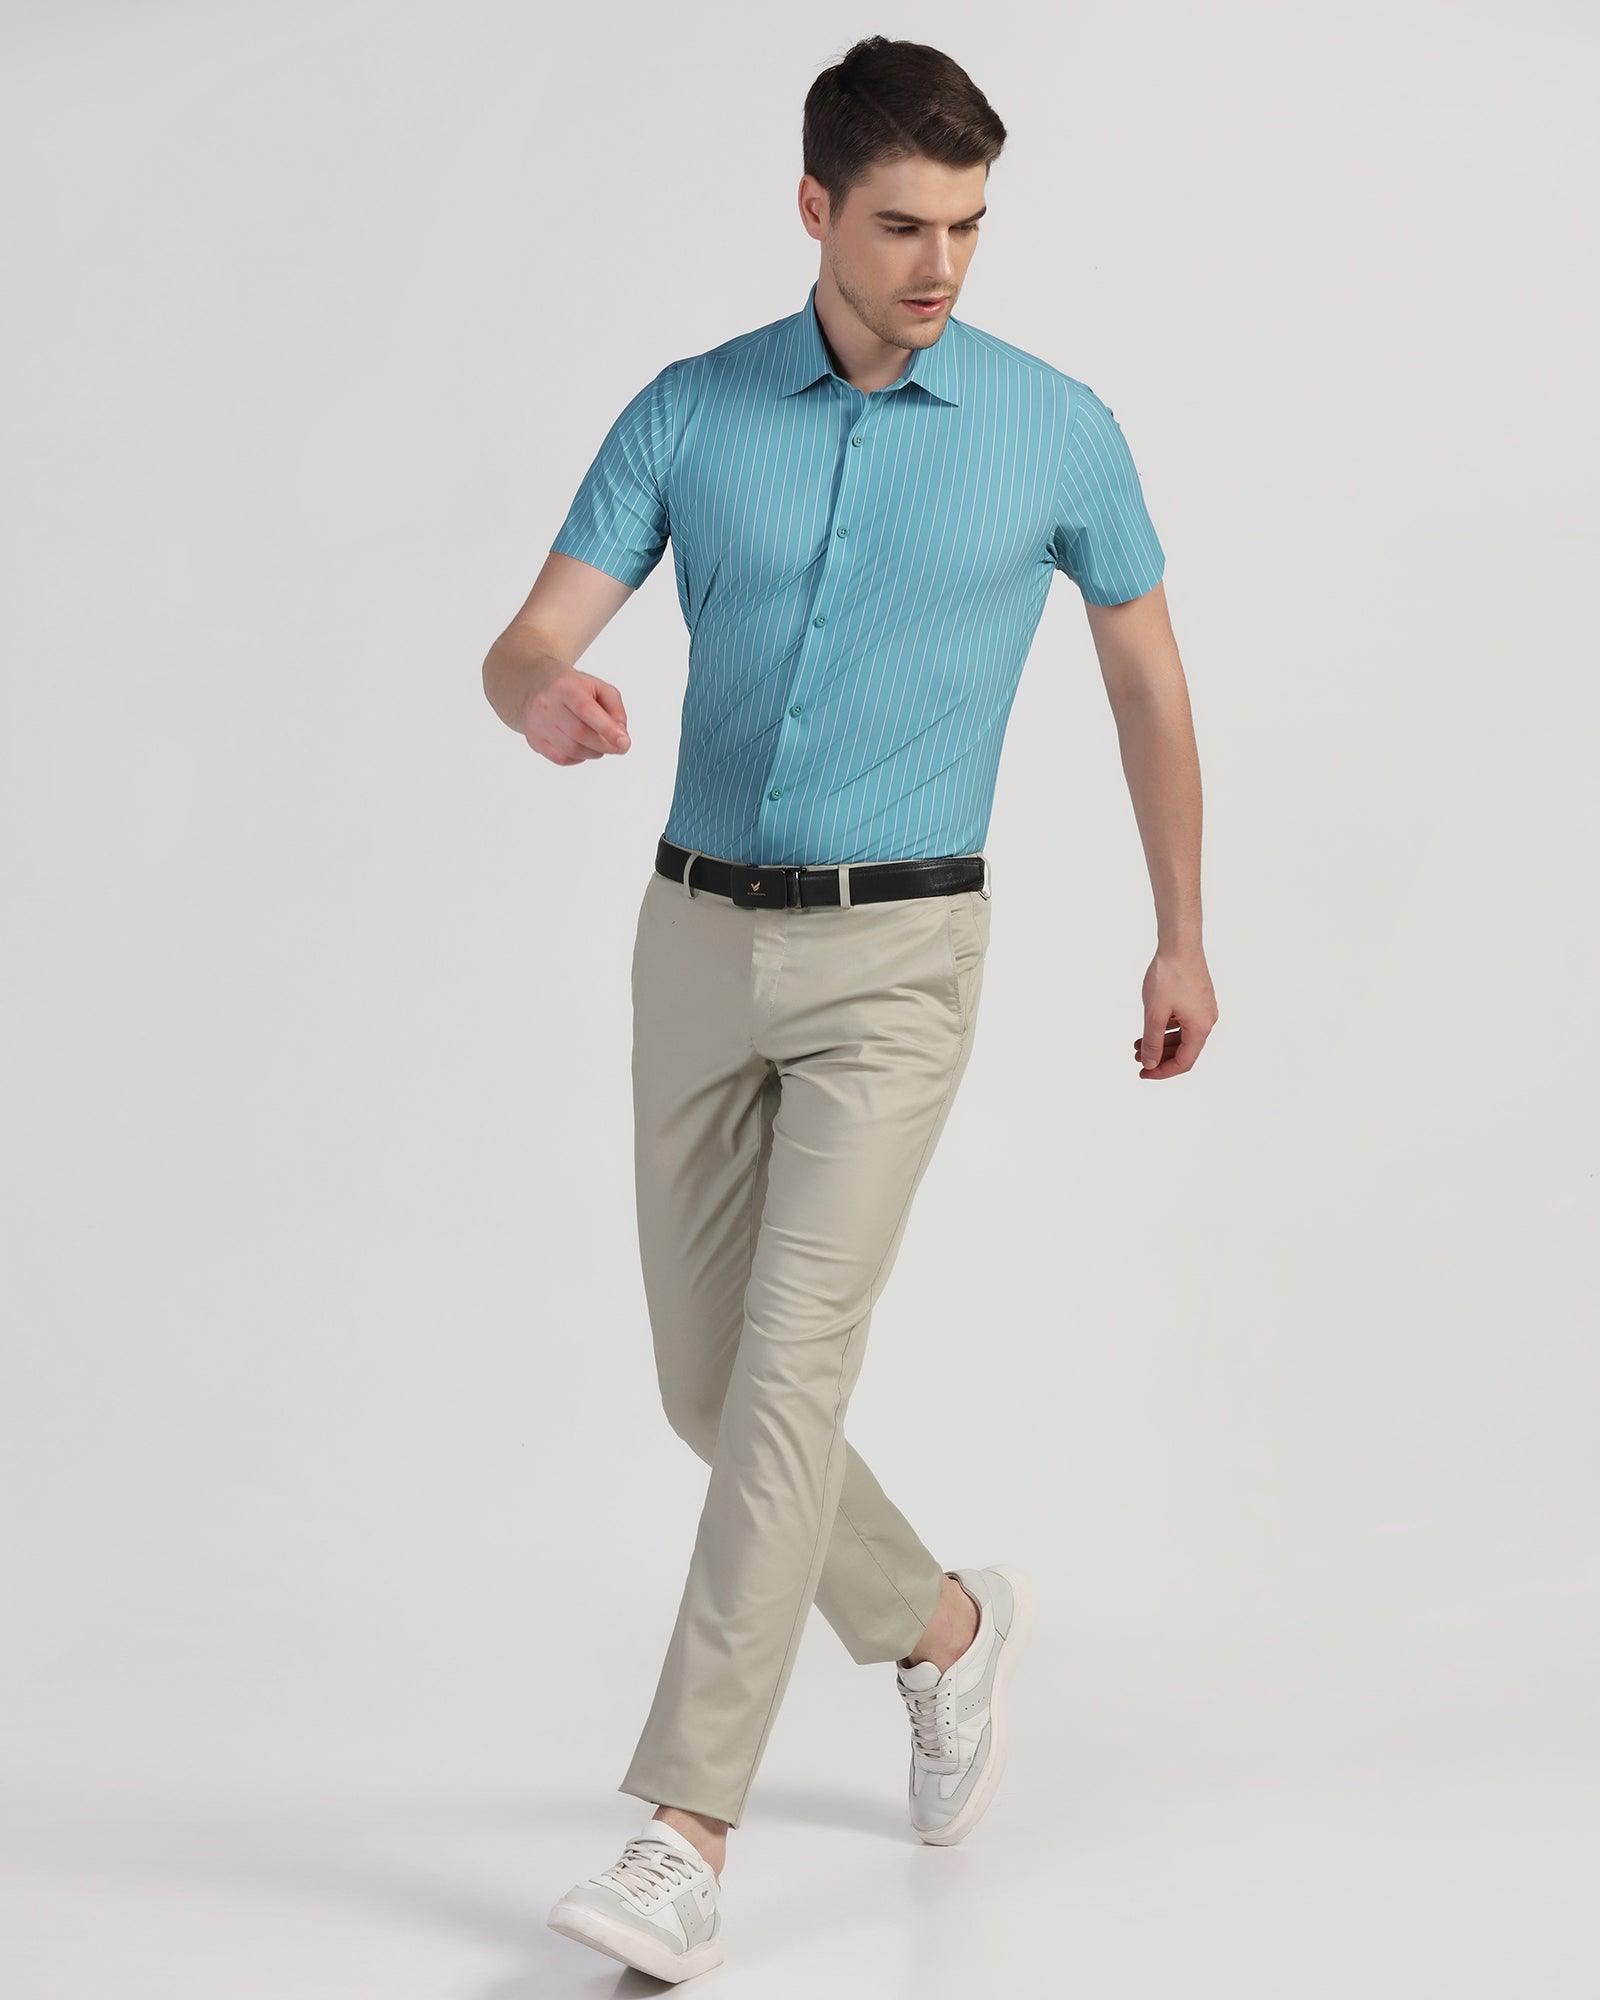 TechPro Formal Half Sleeve Green Stripe Shirt - Dickins